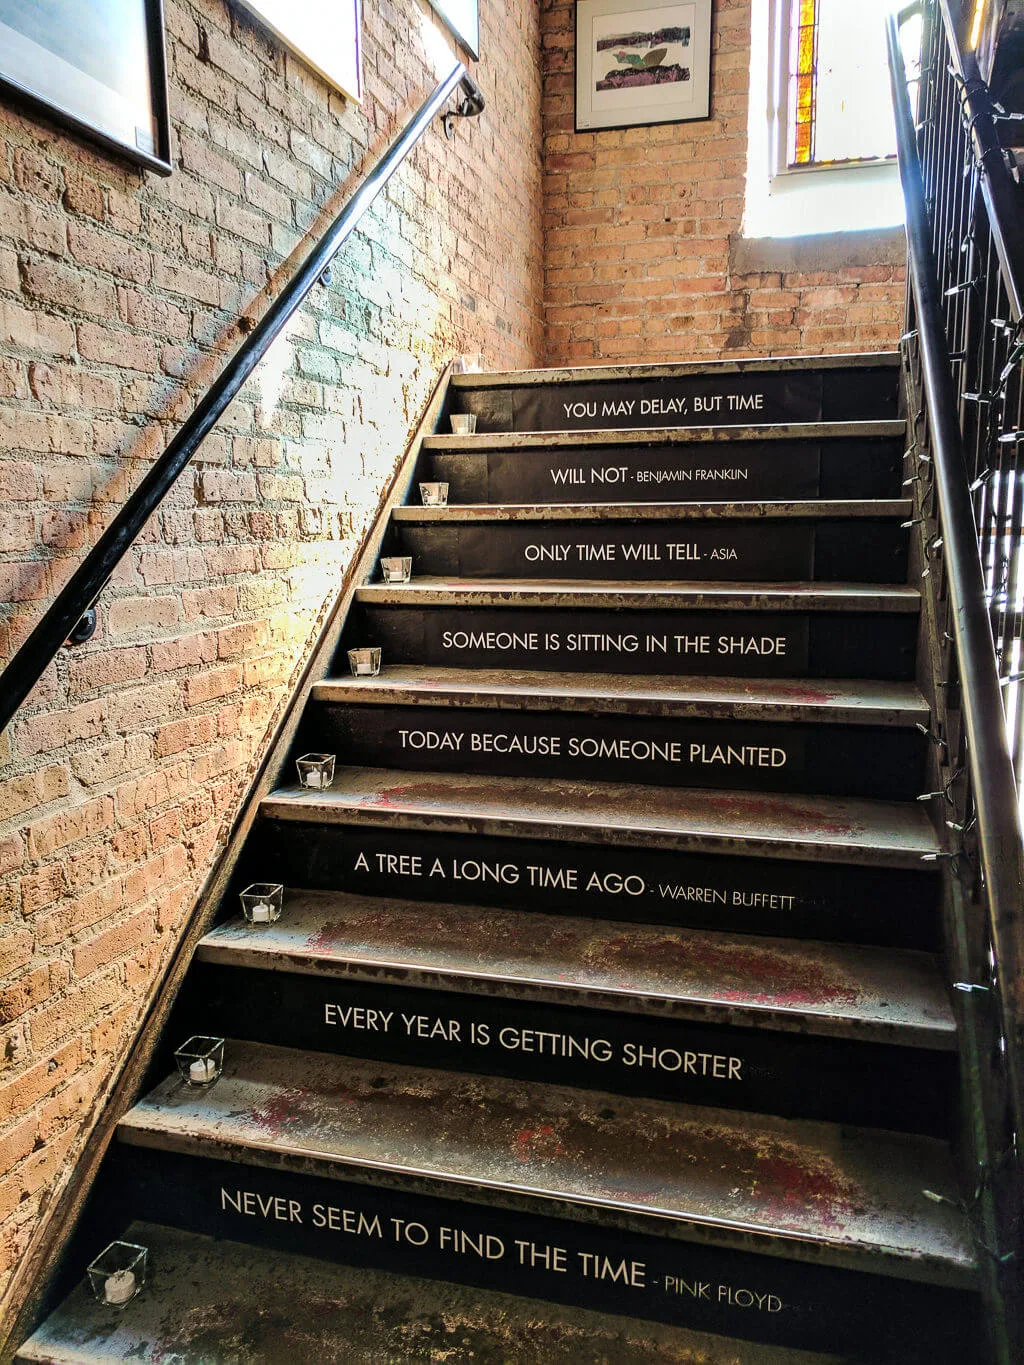 Song lyrics on stair risers decor